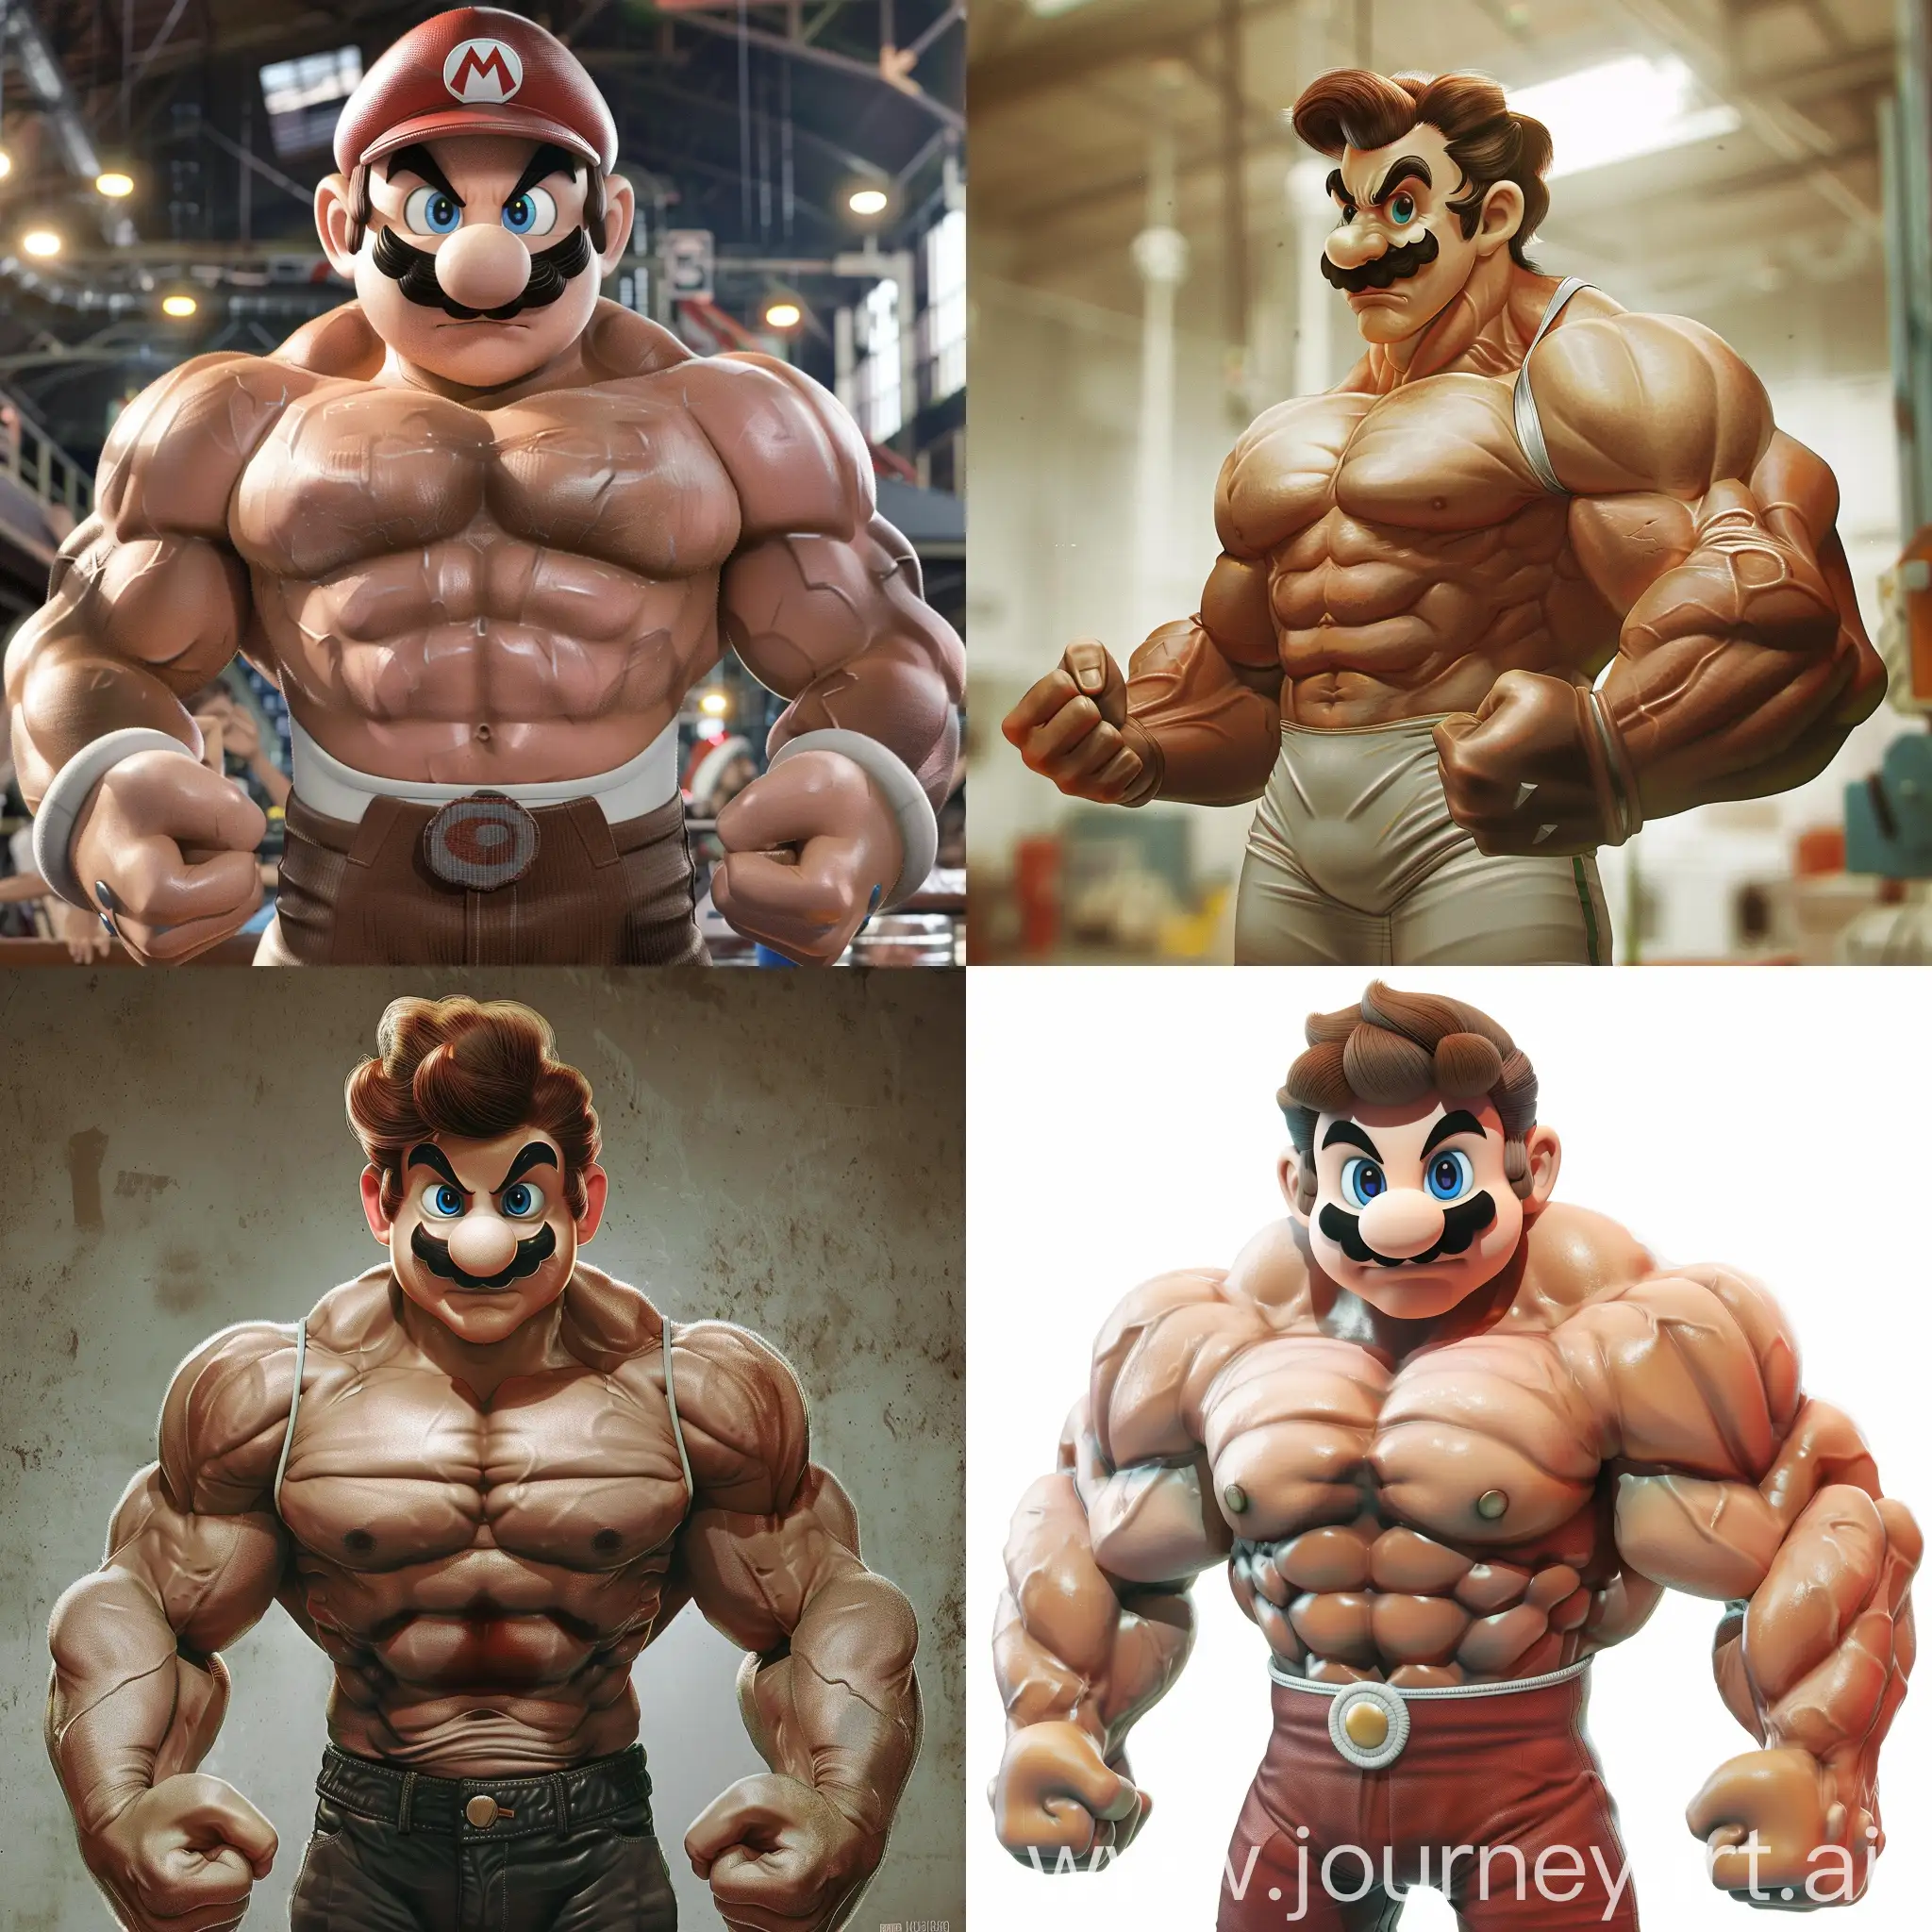 Mario as a very muscular high school wrestler wearing a singlet. 